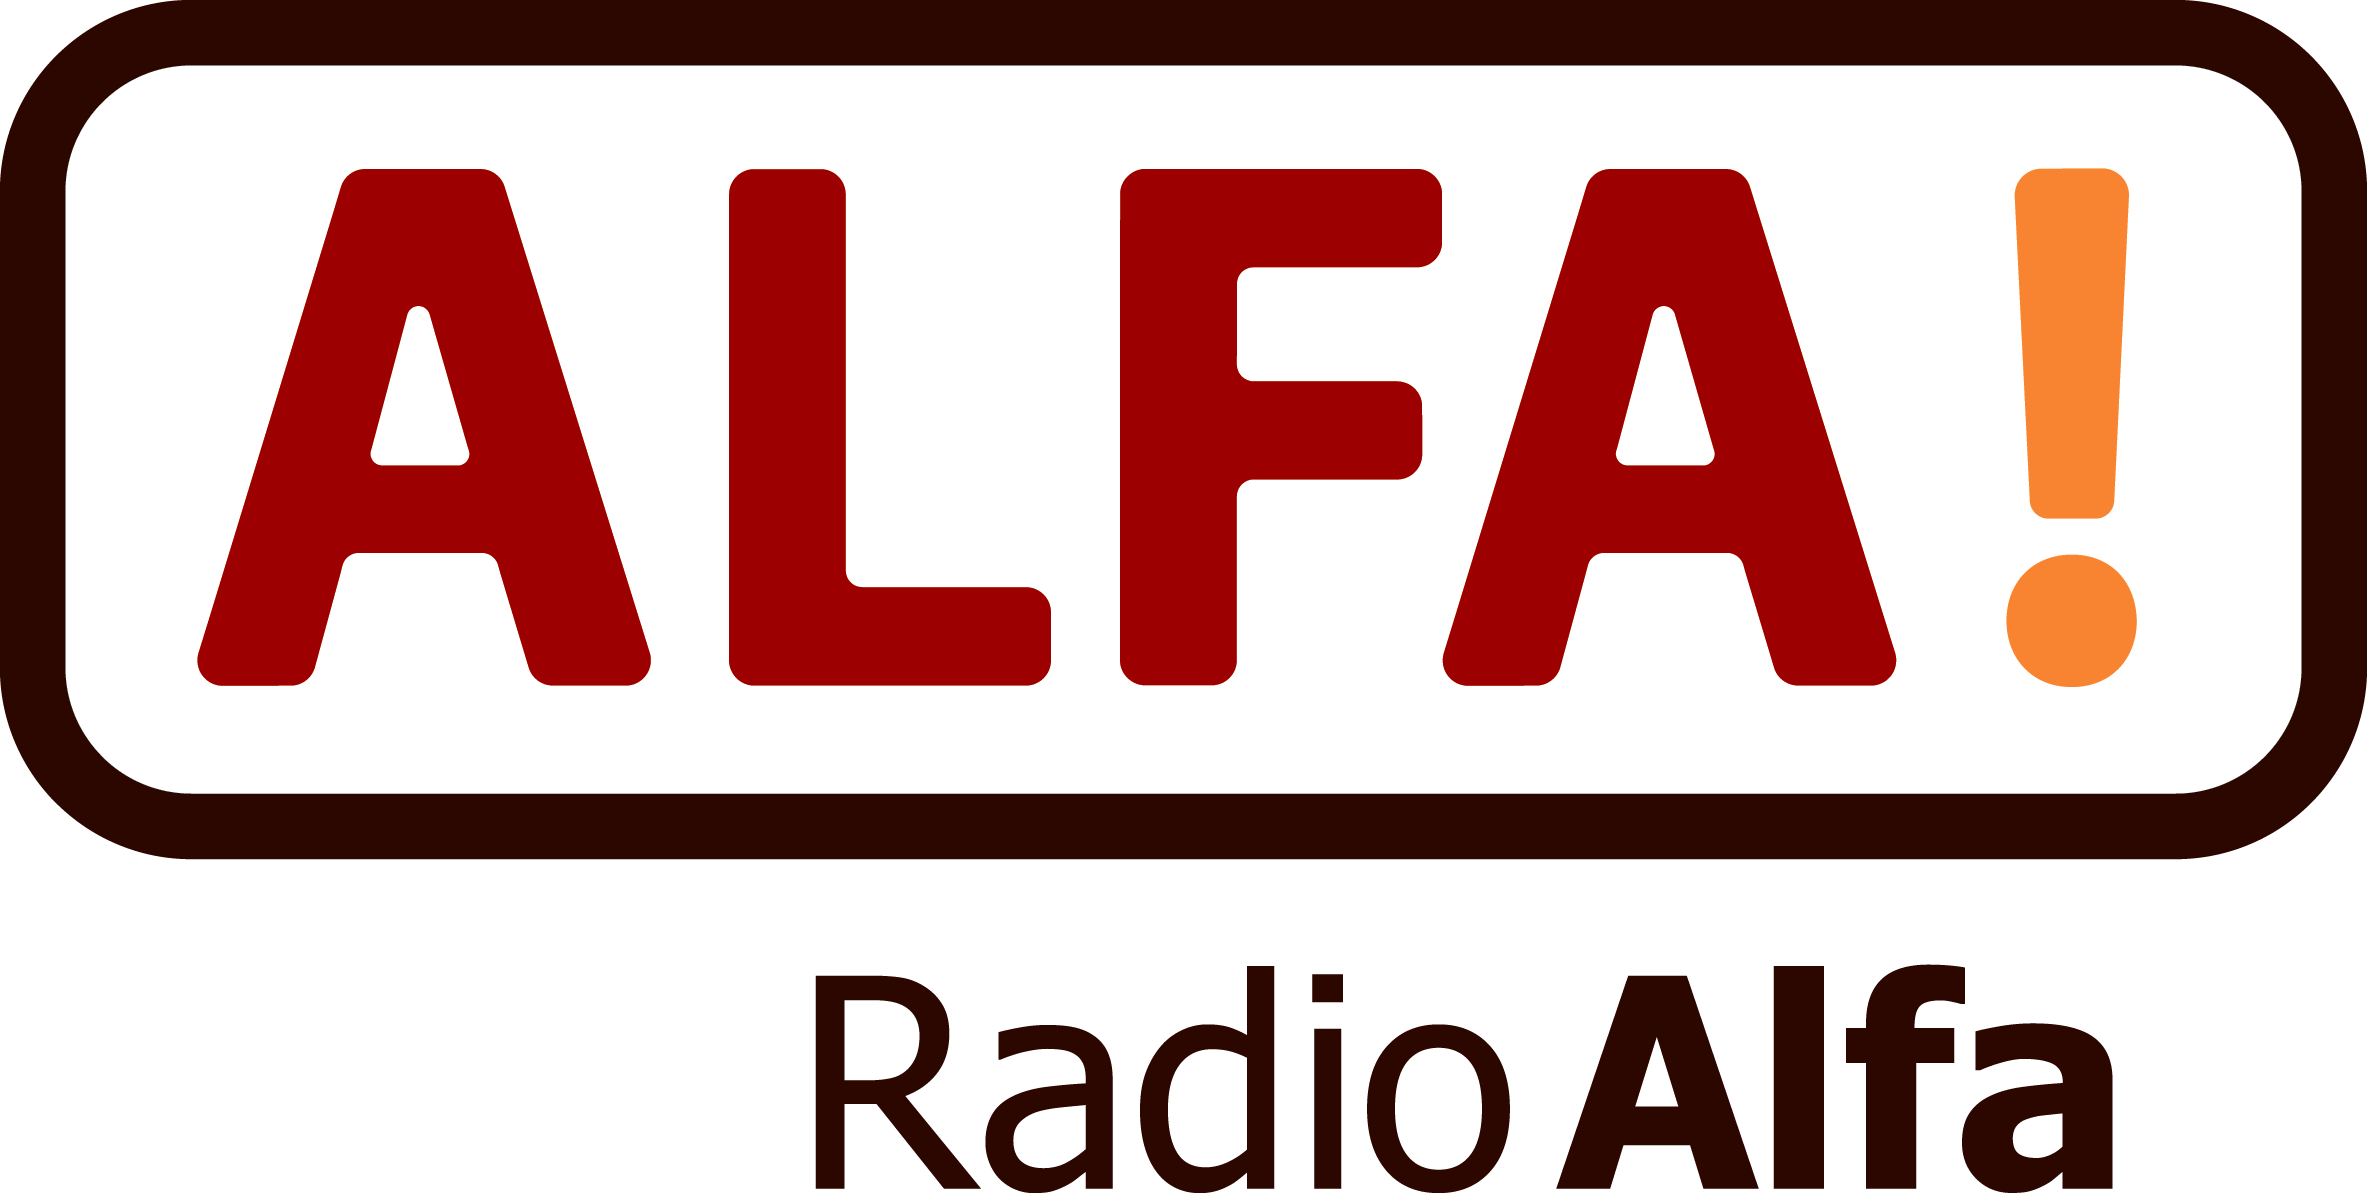 Radio Alfa Midtjylland